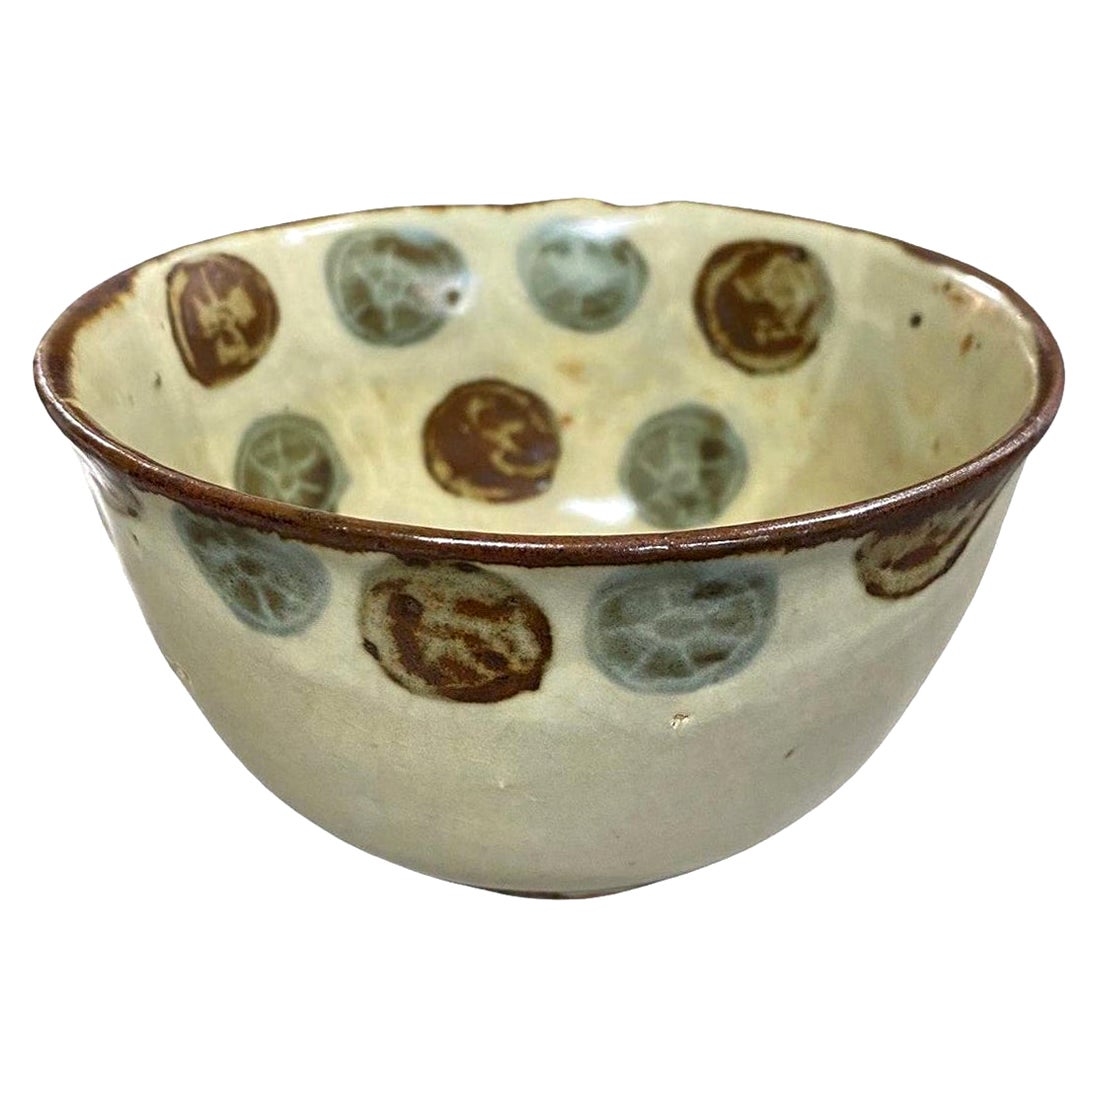 Ogata Kenzan, signierte japanische Teeschale aus Keramik aus der asiatischen Edo-Periode, Chawan